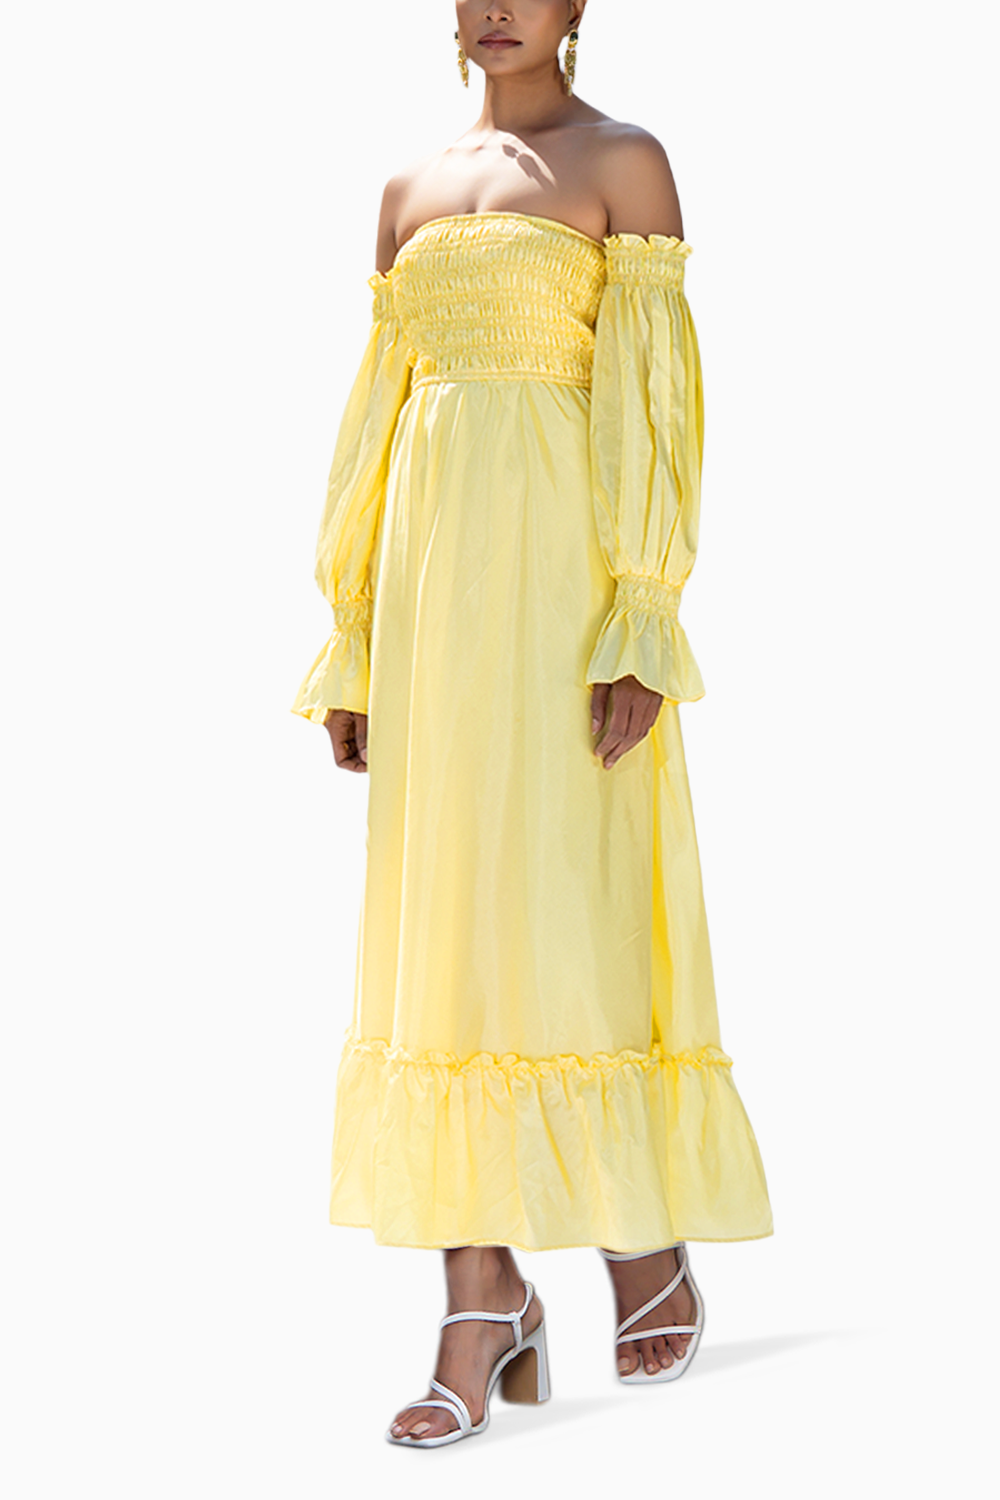 Amie Lemon Sorbet Dress